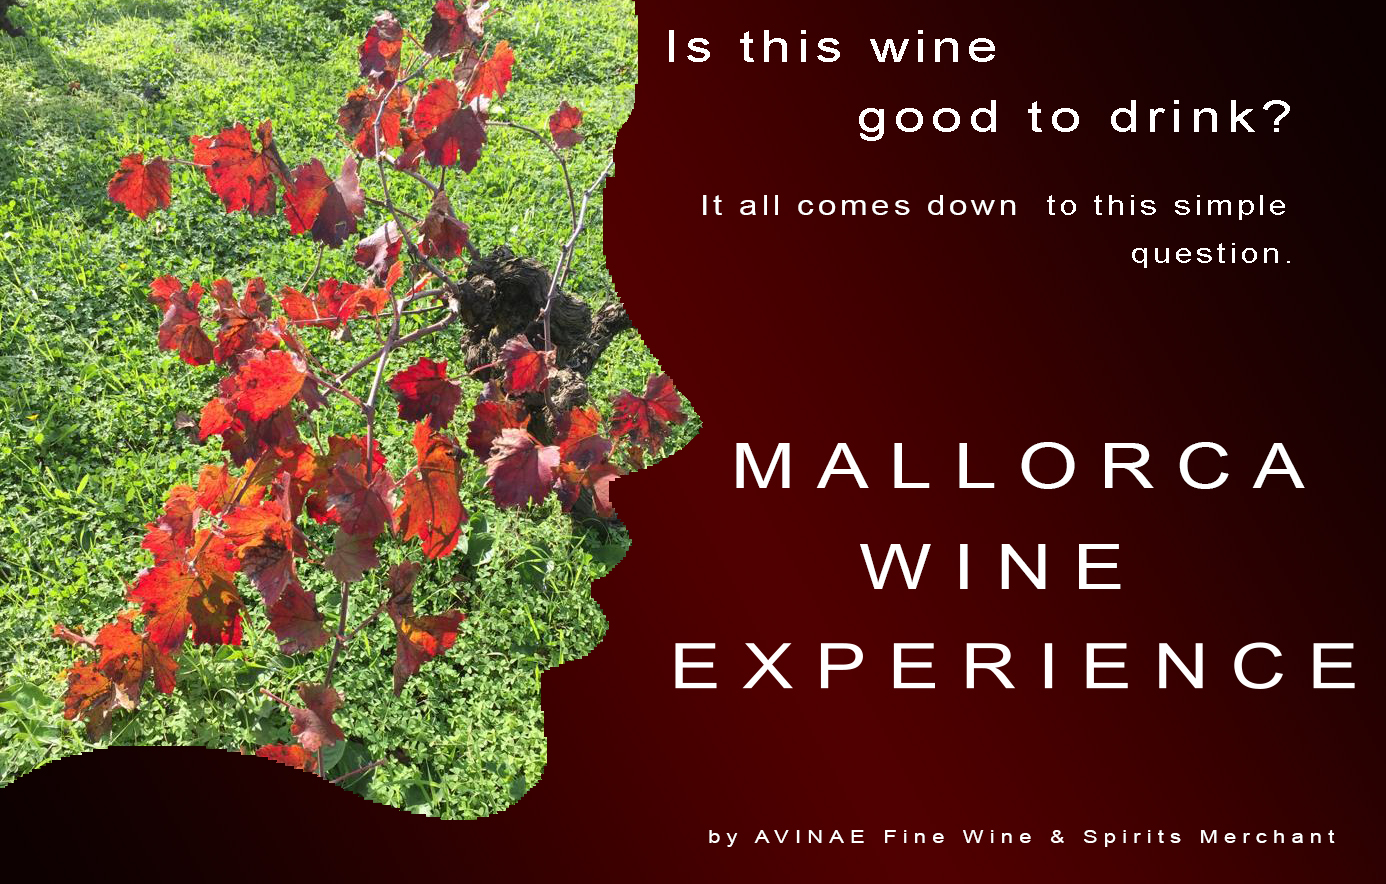 Mallorca Wine Experience close to me